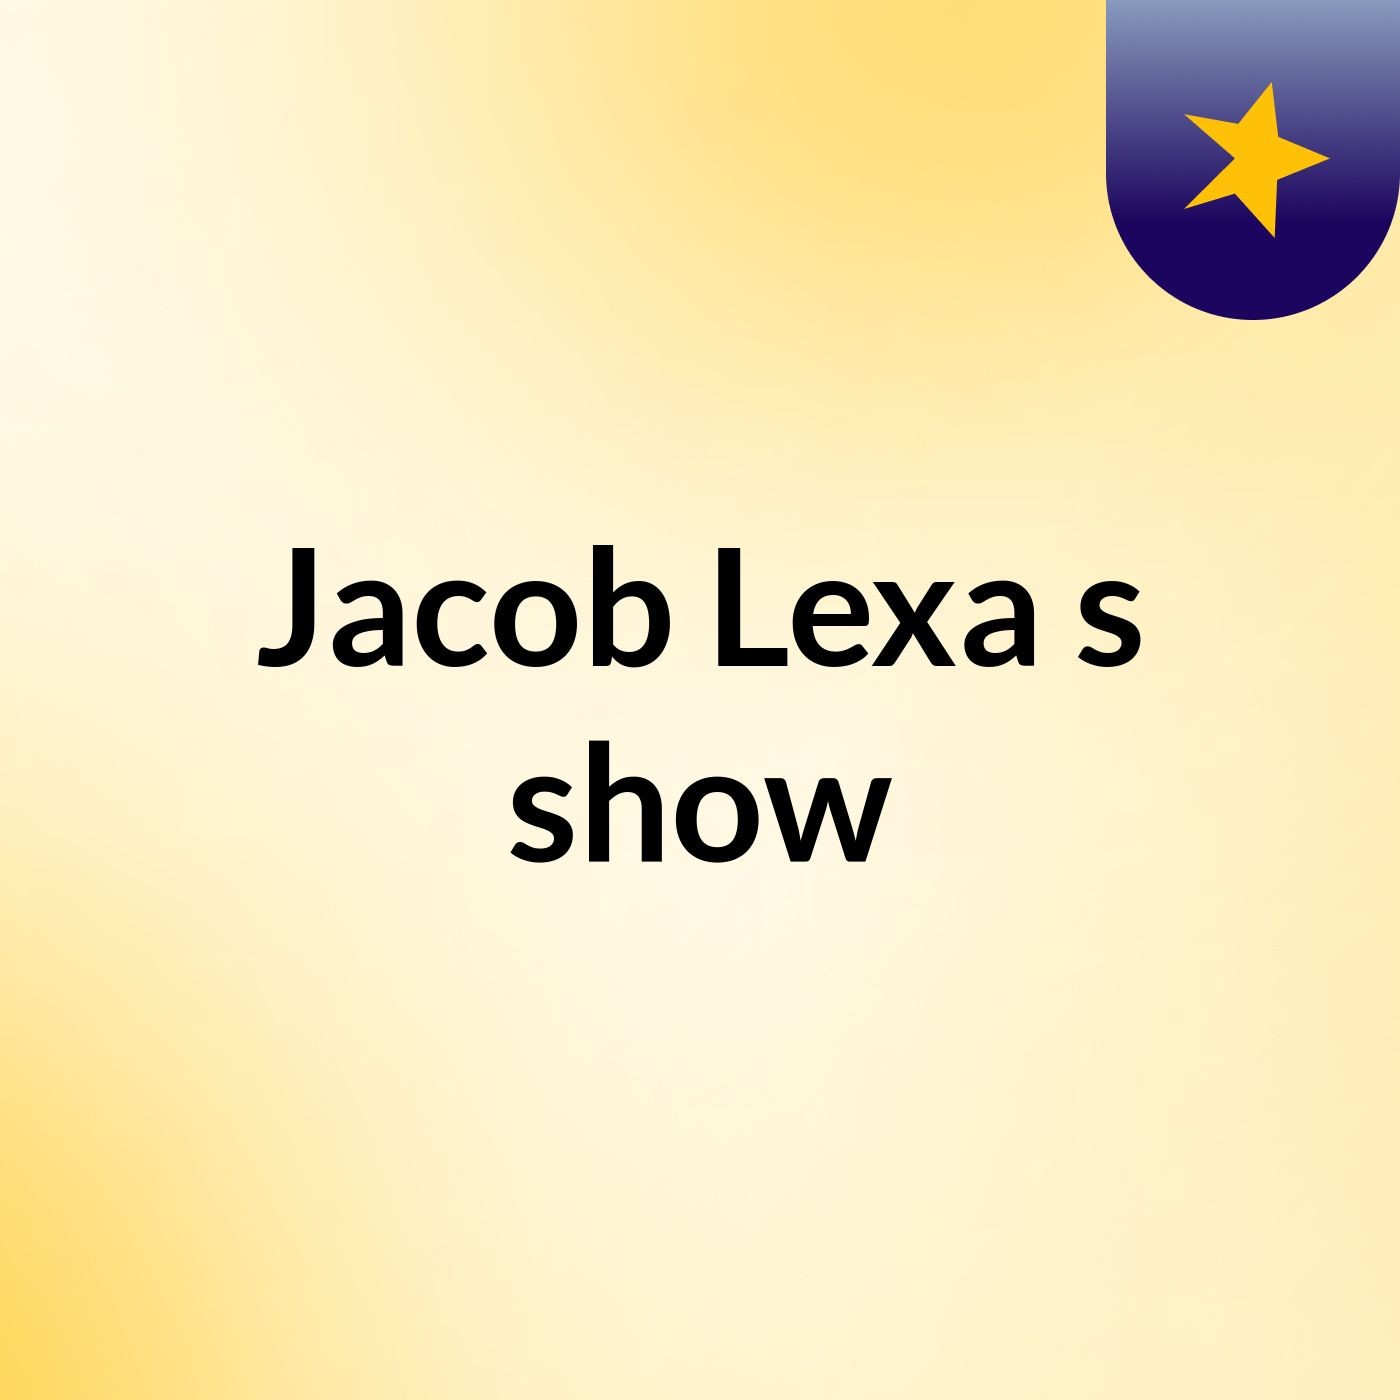 Jacob Lexa's show